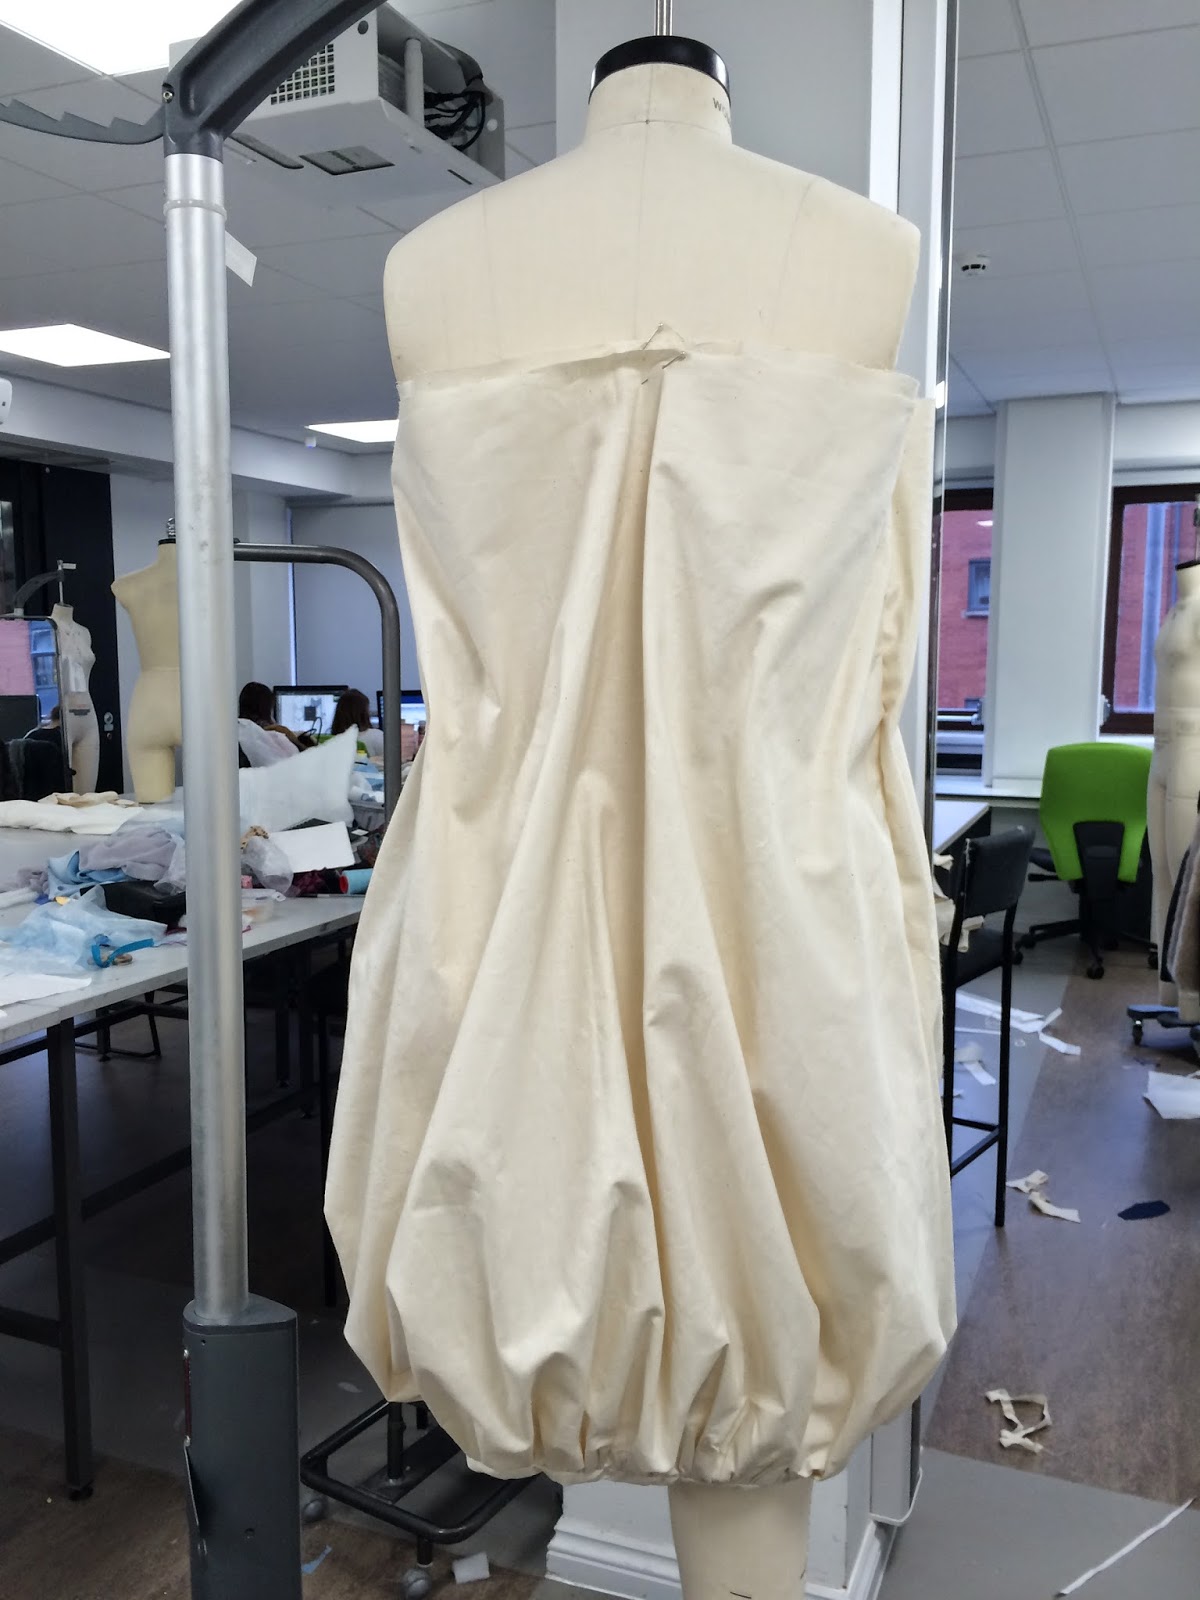 Fashion Product Development: Testing Dress and Adjusting Pattern